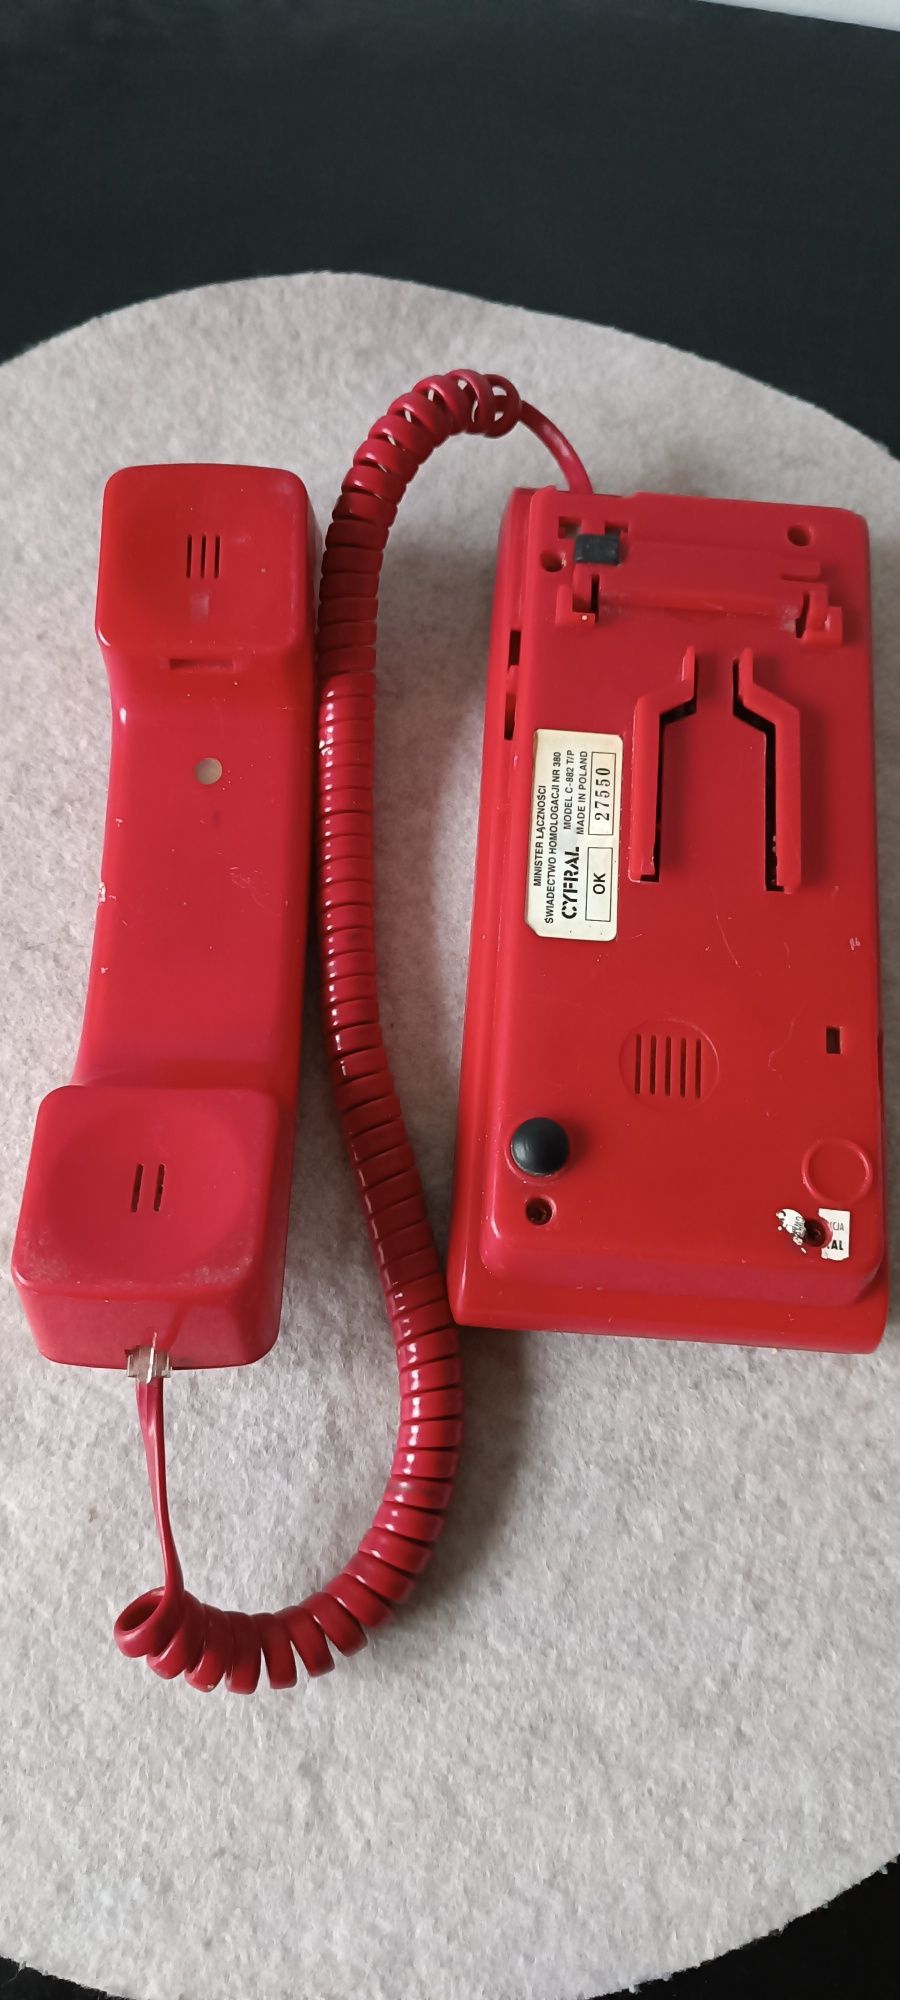 Telefon stacjonarny CYFRAL C-882 T/P PRL